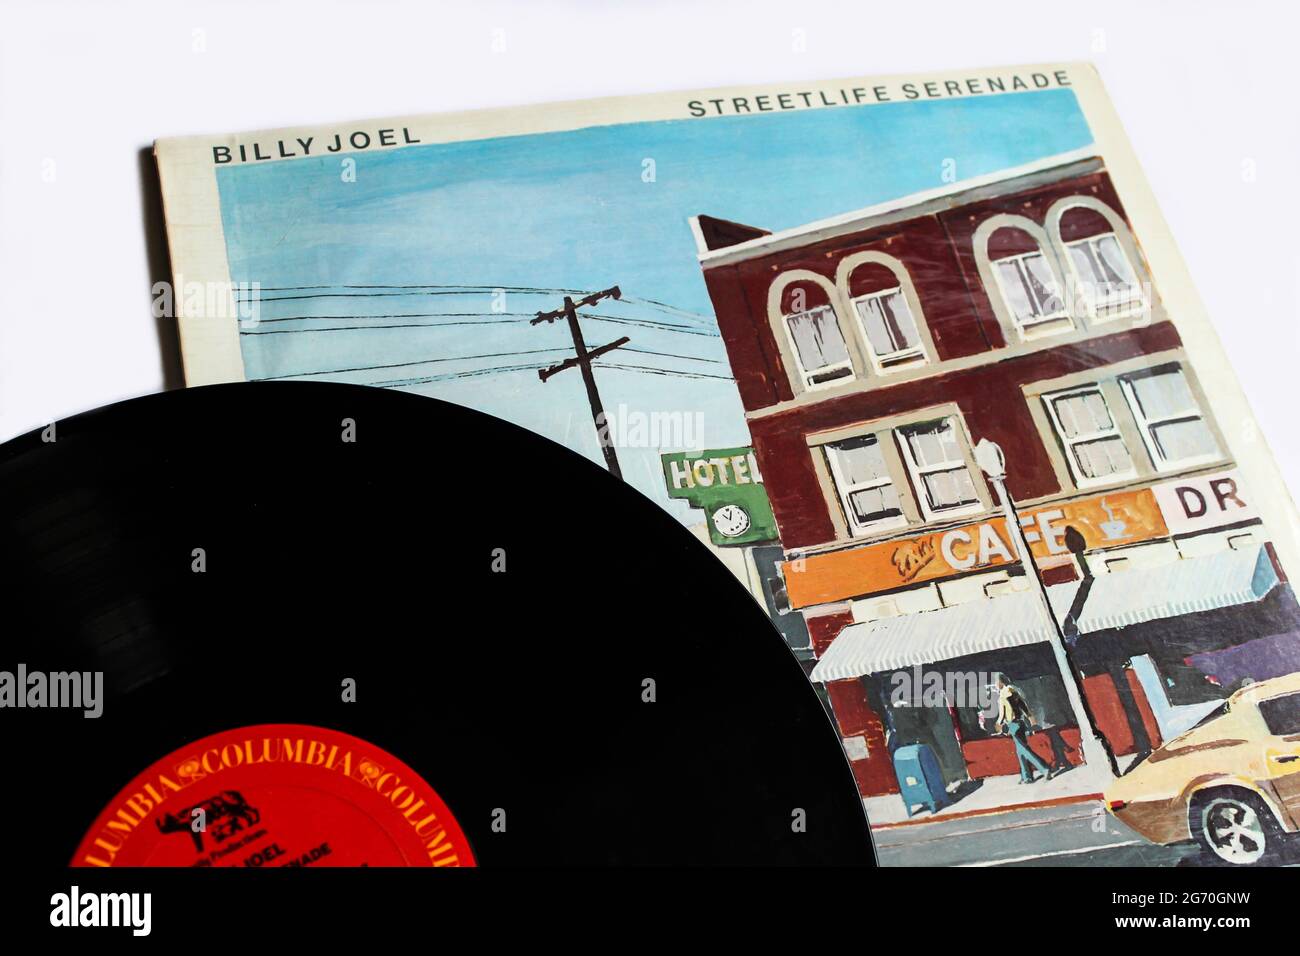 Pop rock and soft rock artist, Billy Joel music album on vinyl record LP disc. Titled: Streetlife Serenade album cover Stock Photo